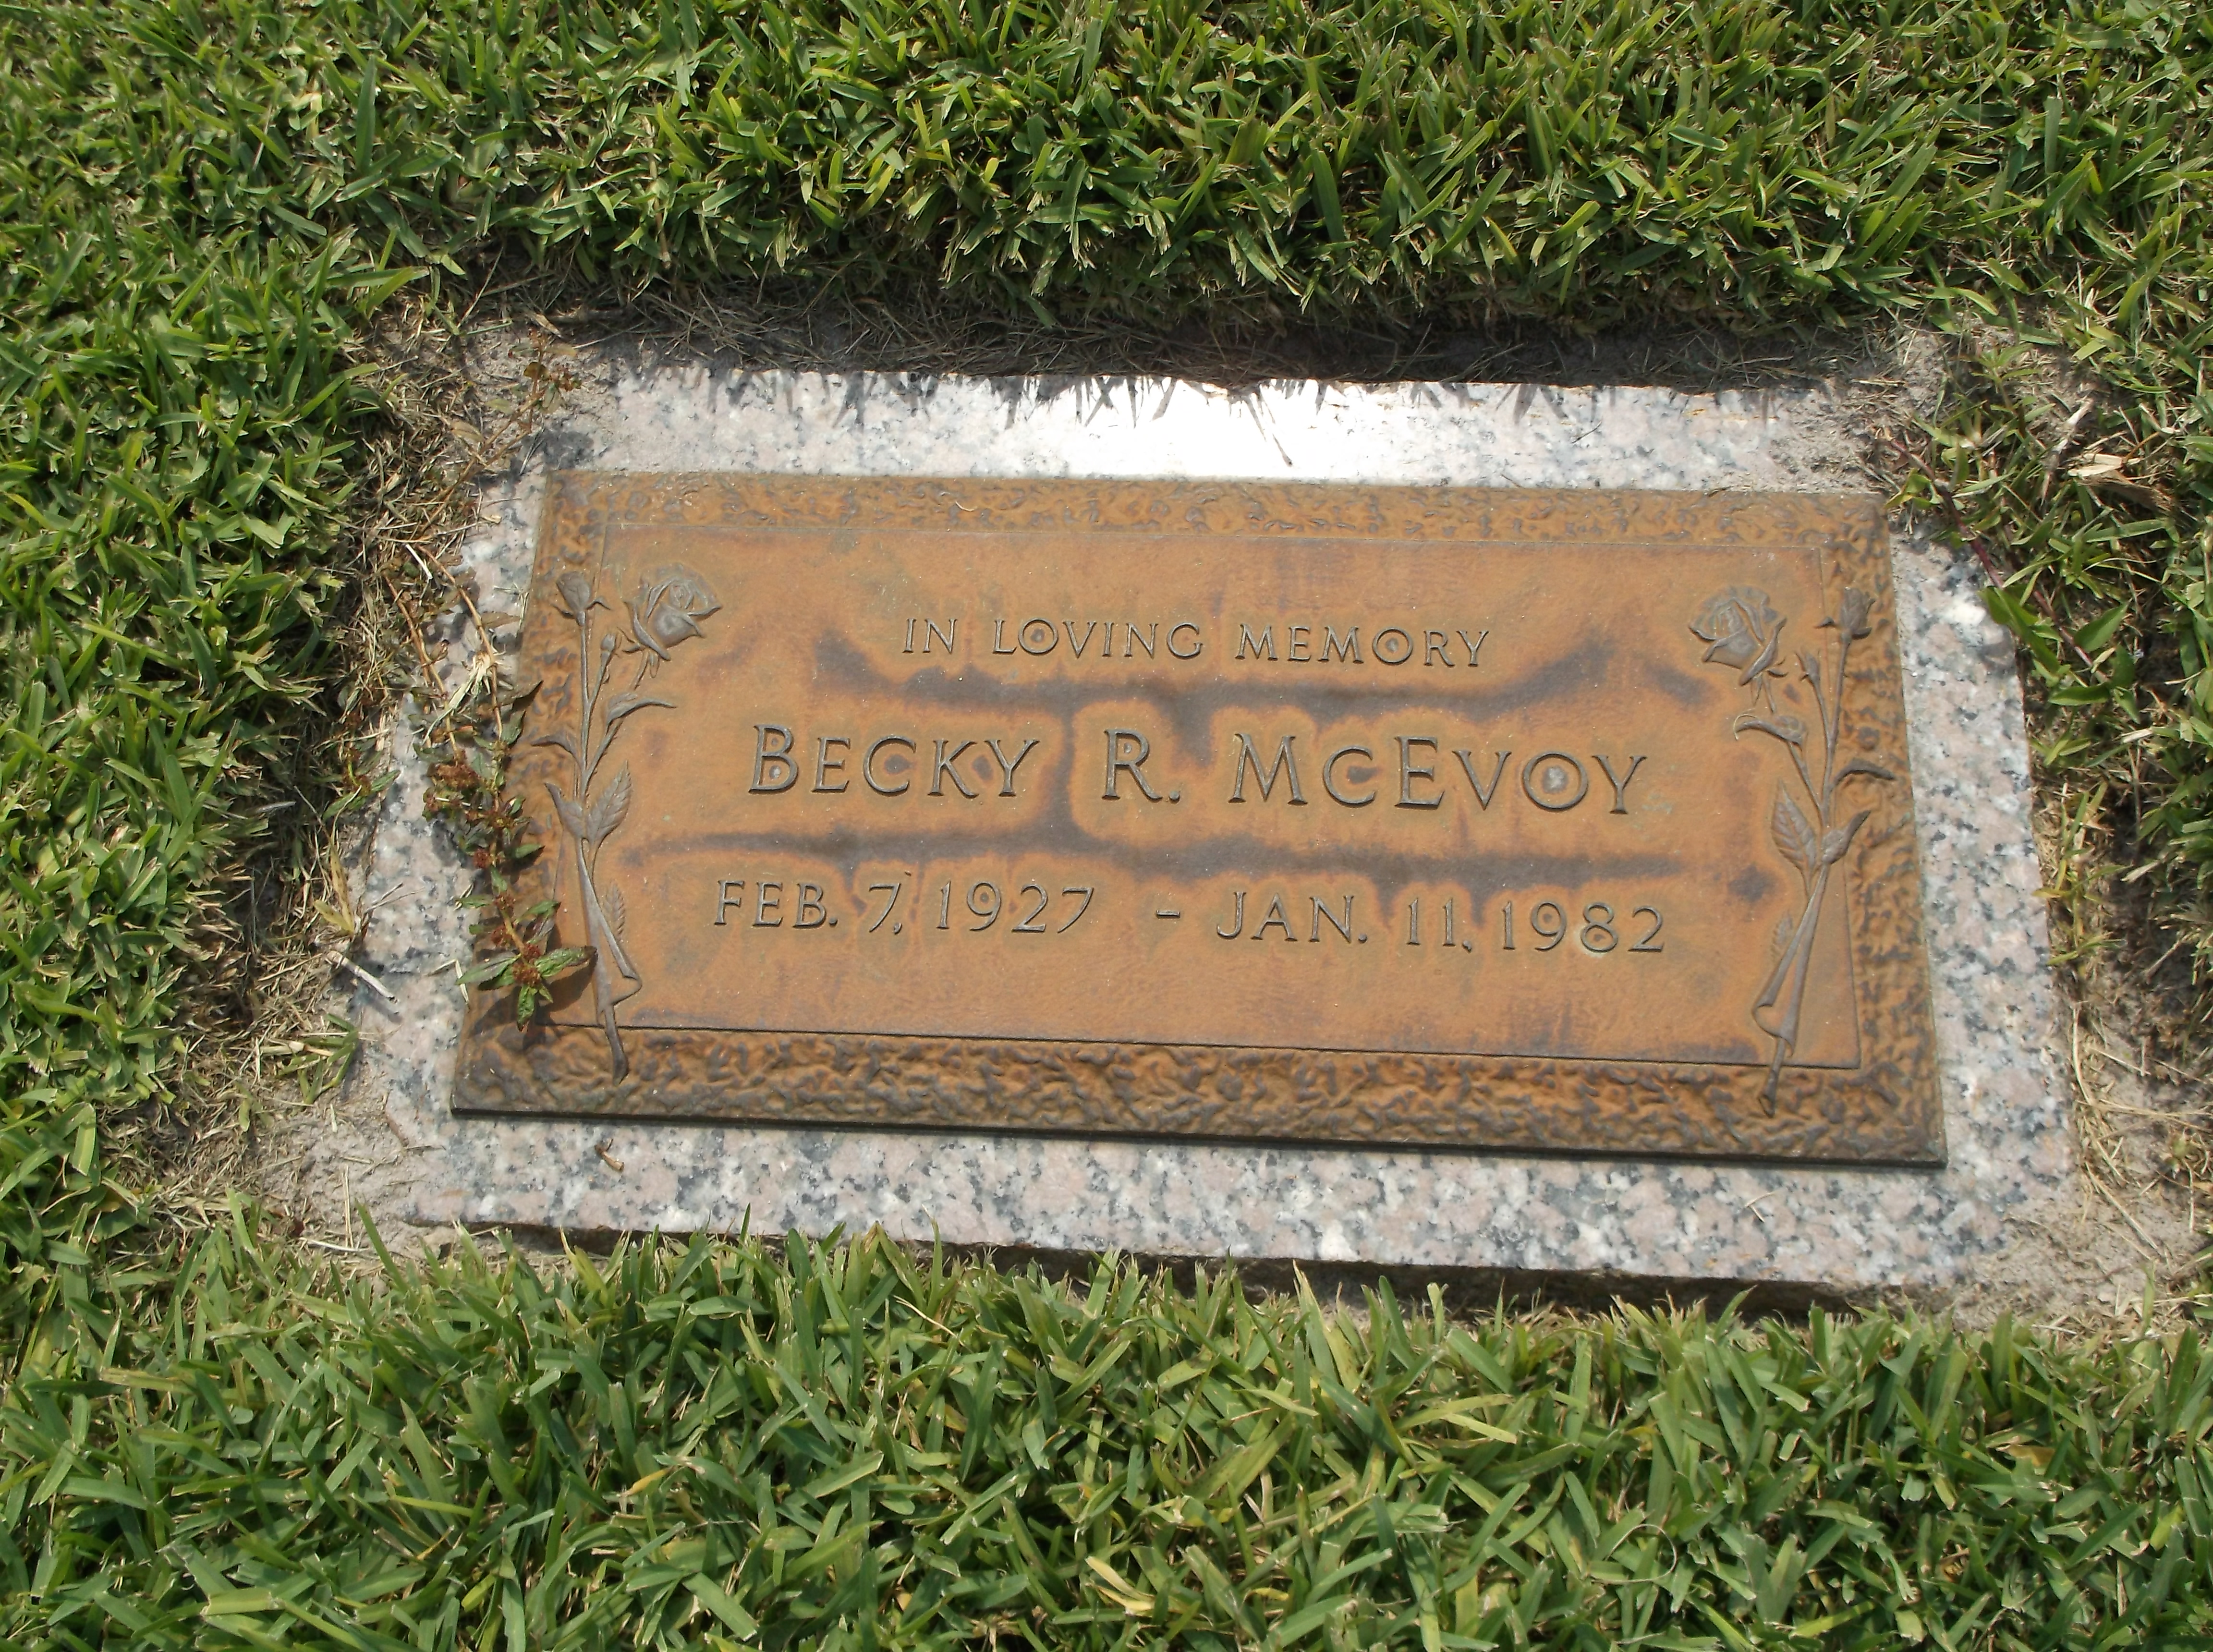 Becky R McEvoy